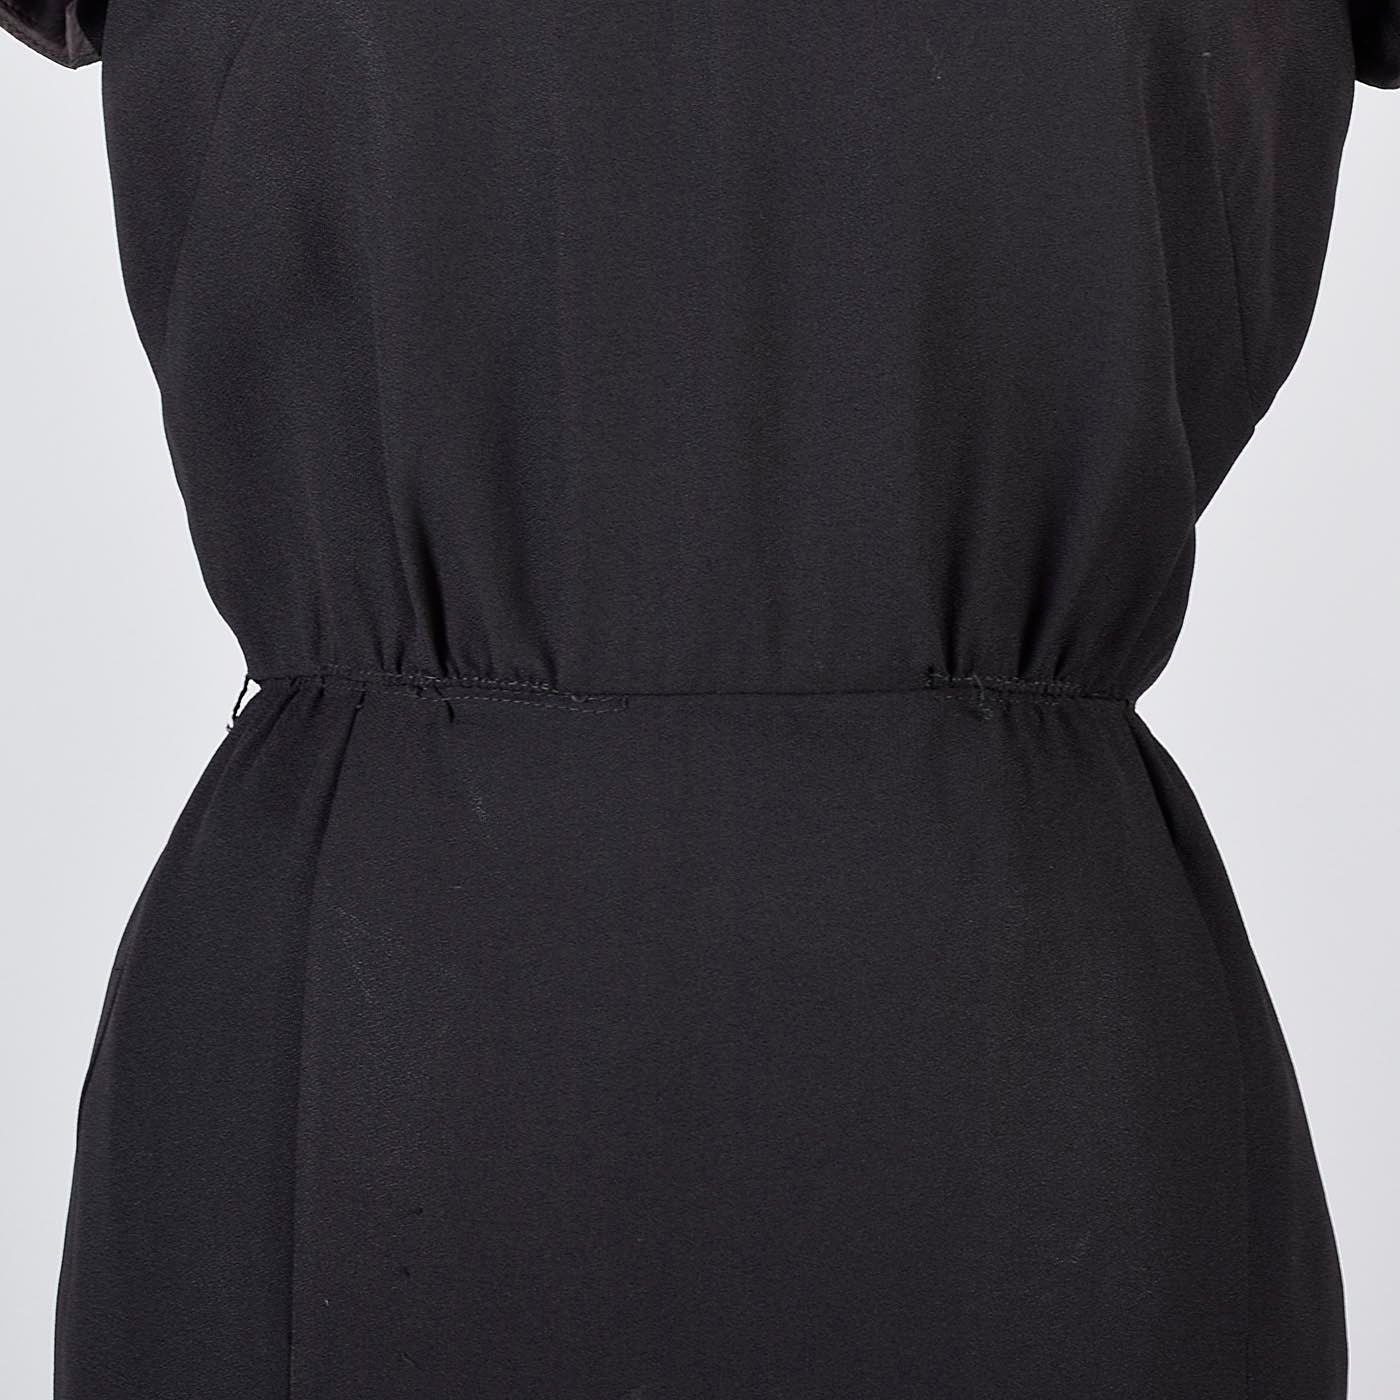 1960s Little Black Dress with Sheer Chiffon Shoulders